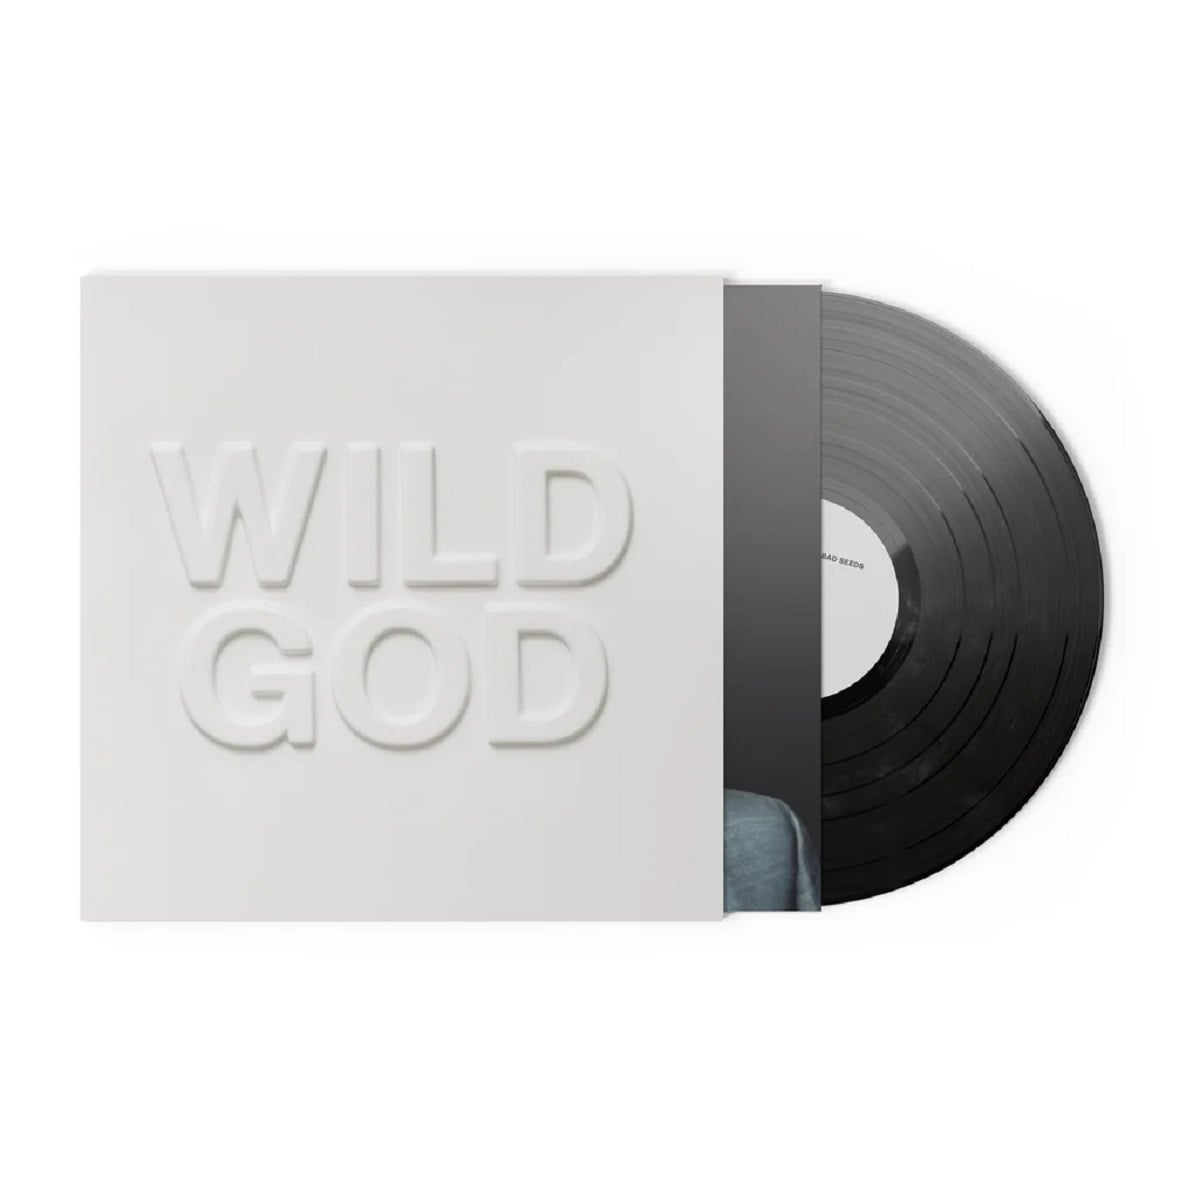 Wild God - Nick Cave & The Bad Seeds